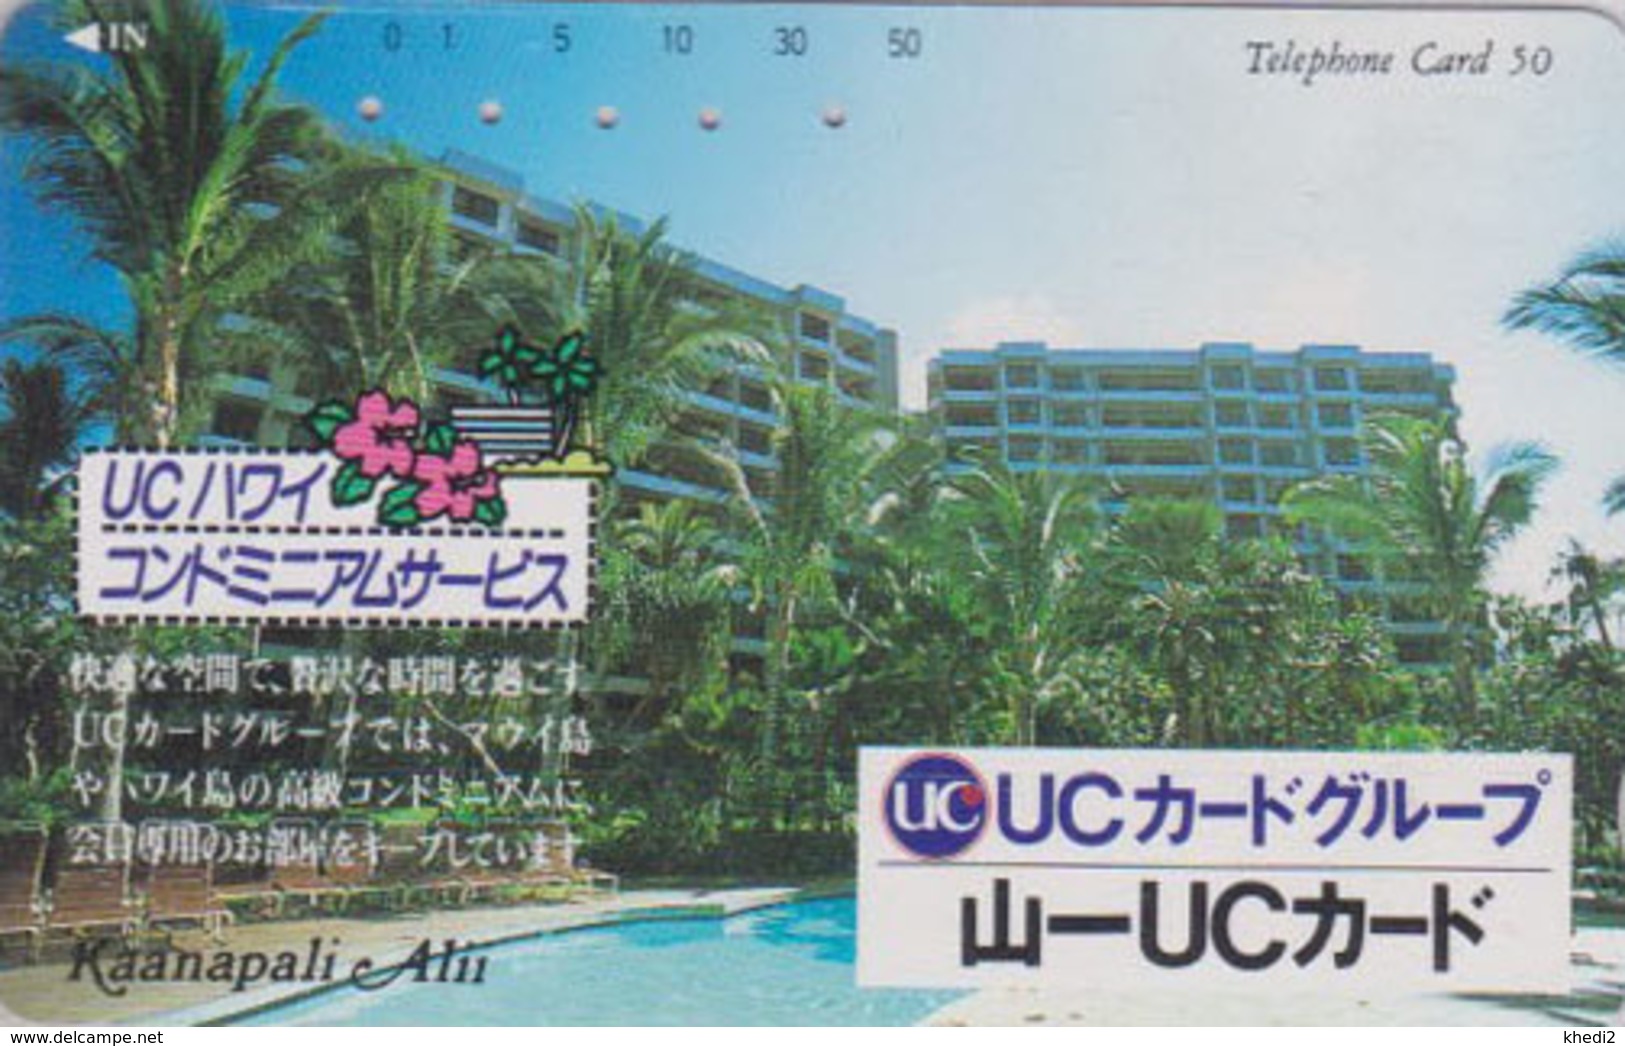 Télécarte Japon / 110-117617 - HAWAII - KAANAPALI - UC BANK CREDIT CARD / Modèle 1 - Japan Phonecard - Site USA 459 - Francobolli & Monete